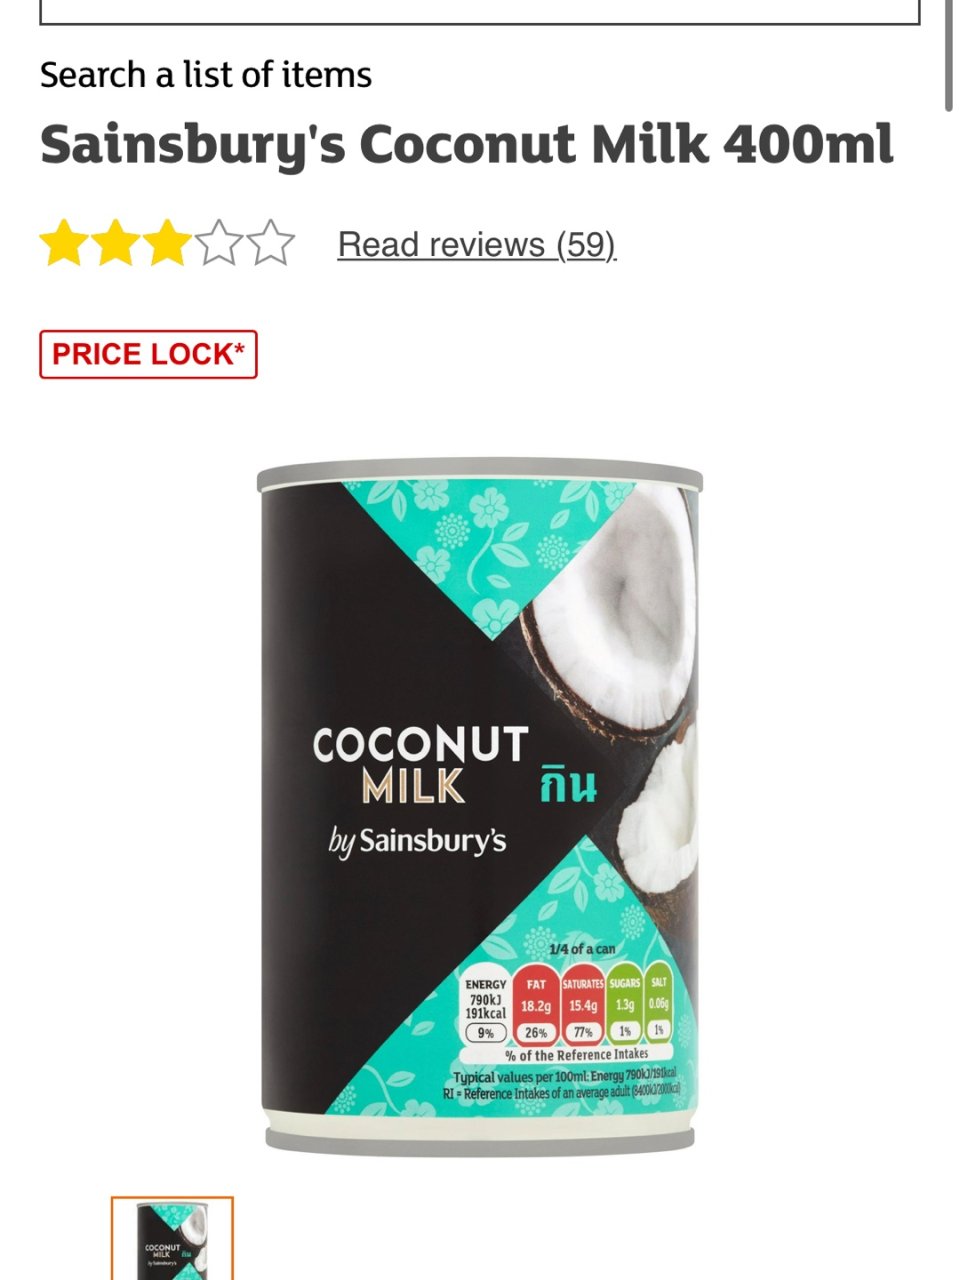 Sainsbury's Coconut Milk 400ml